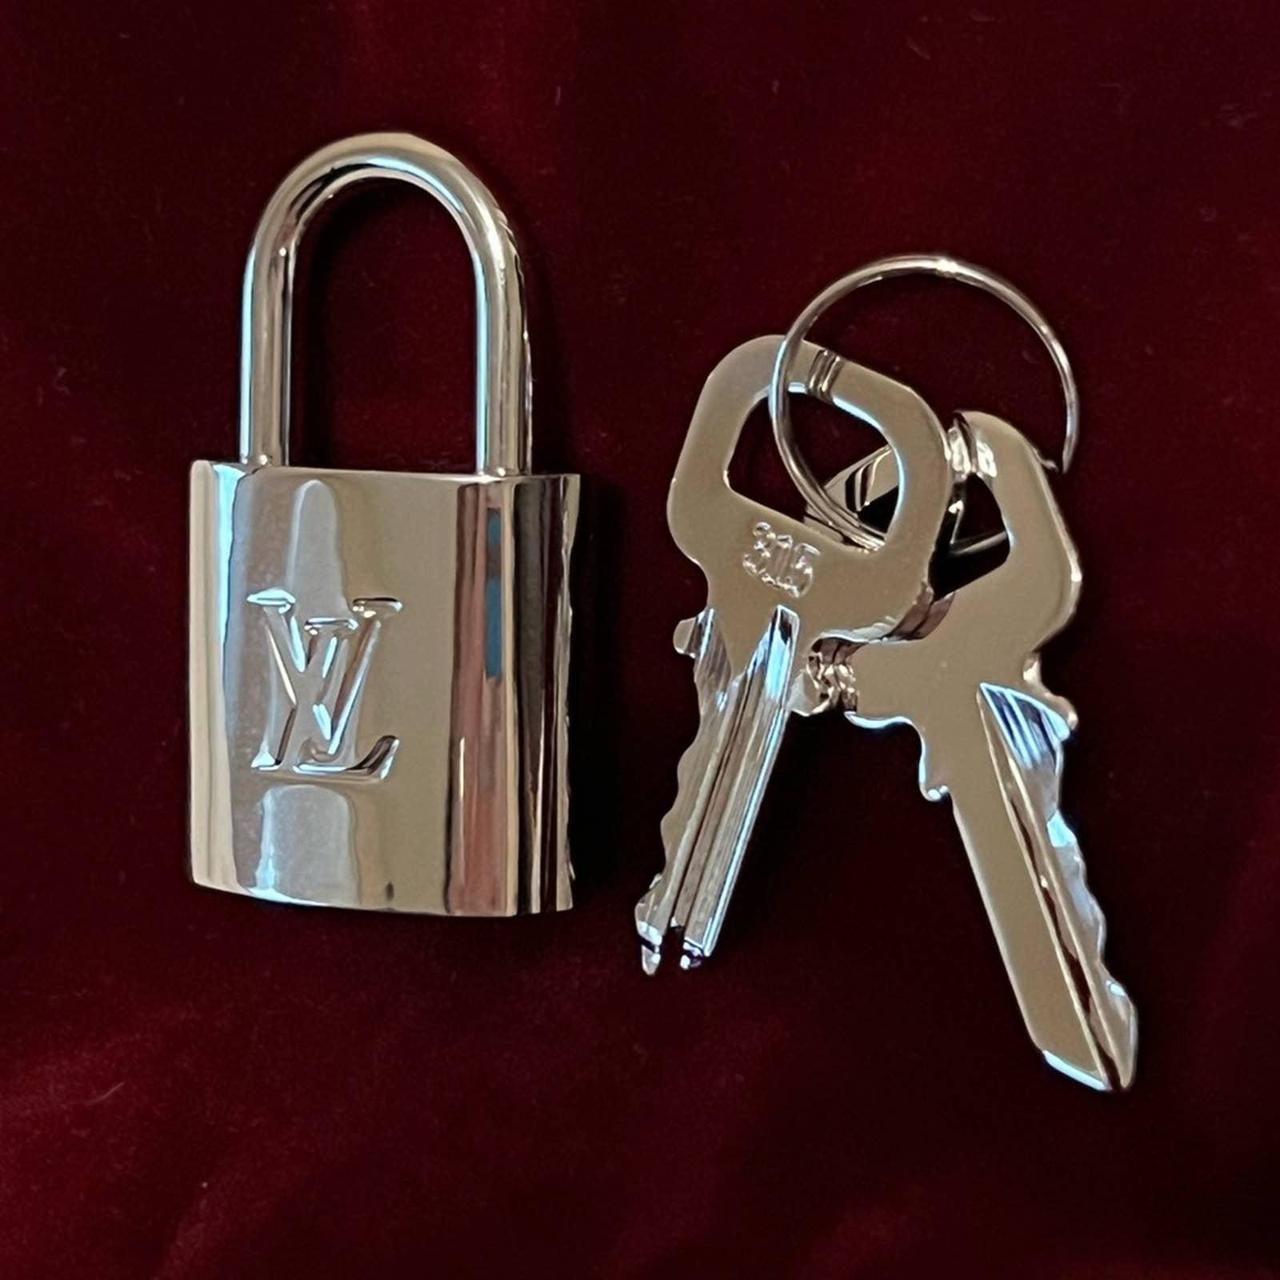 Louis Vuitton Palladium Lock & Key Set - Silver Bag Accessories